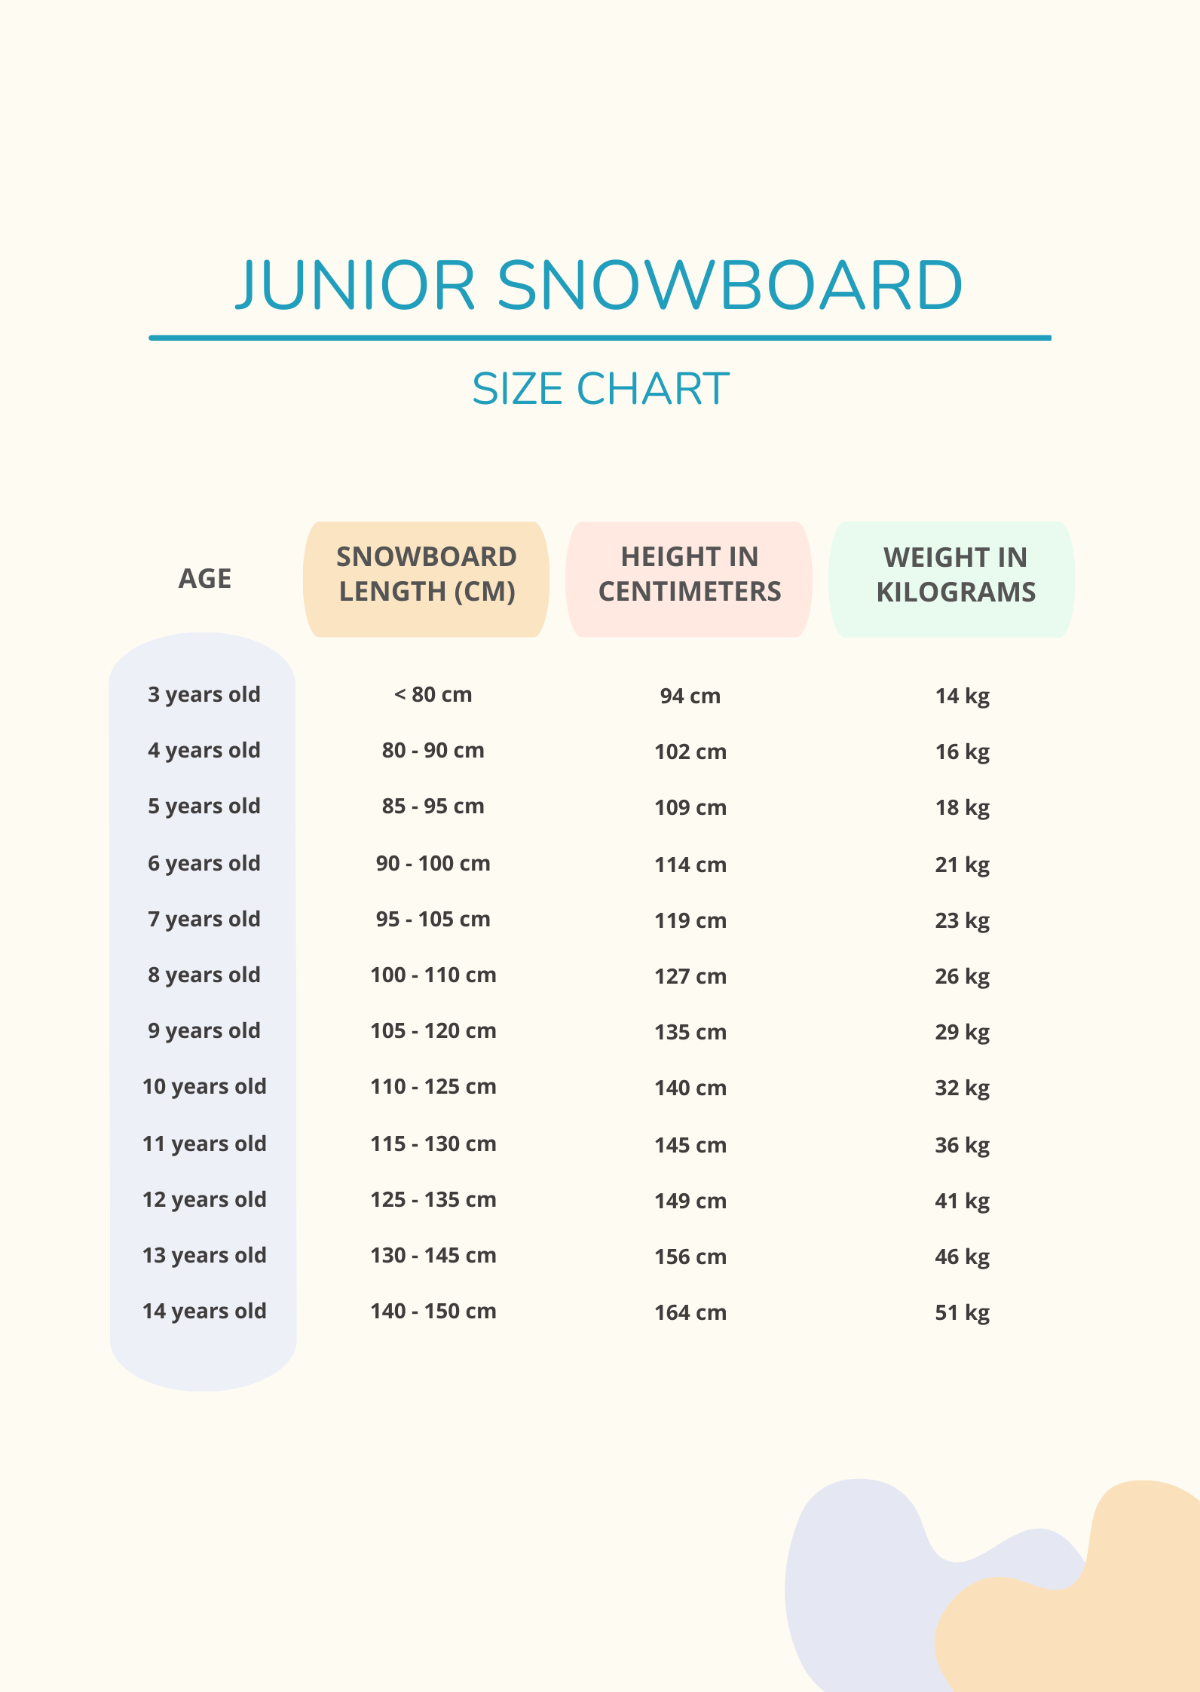 Junior Snowboard Size Chart Template